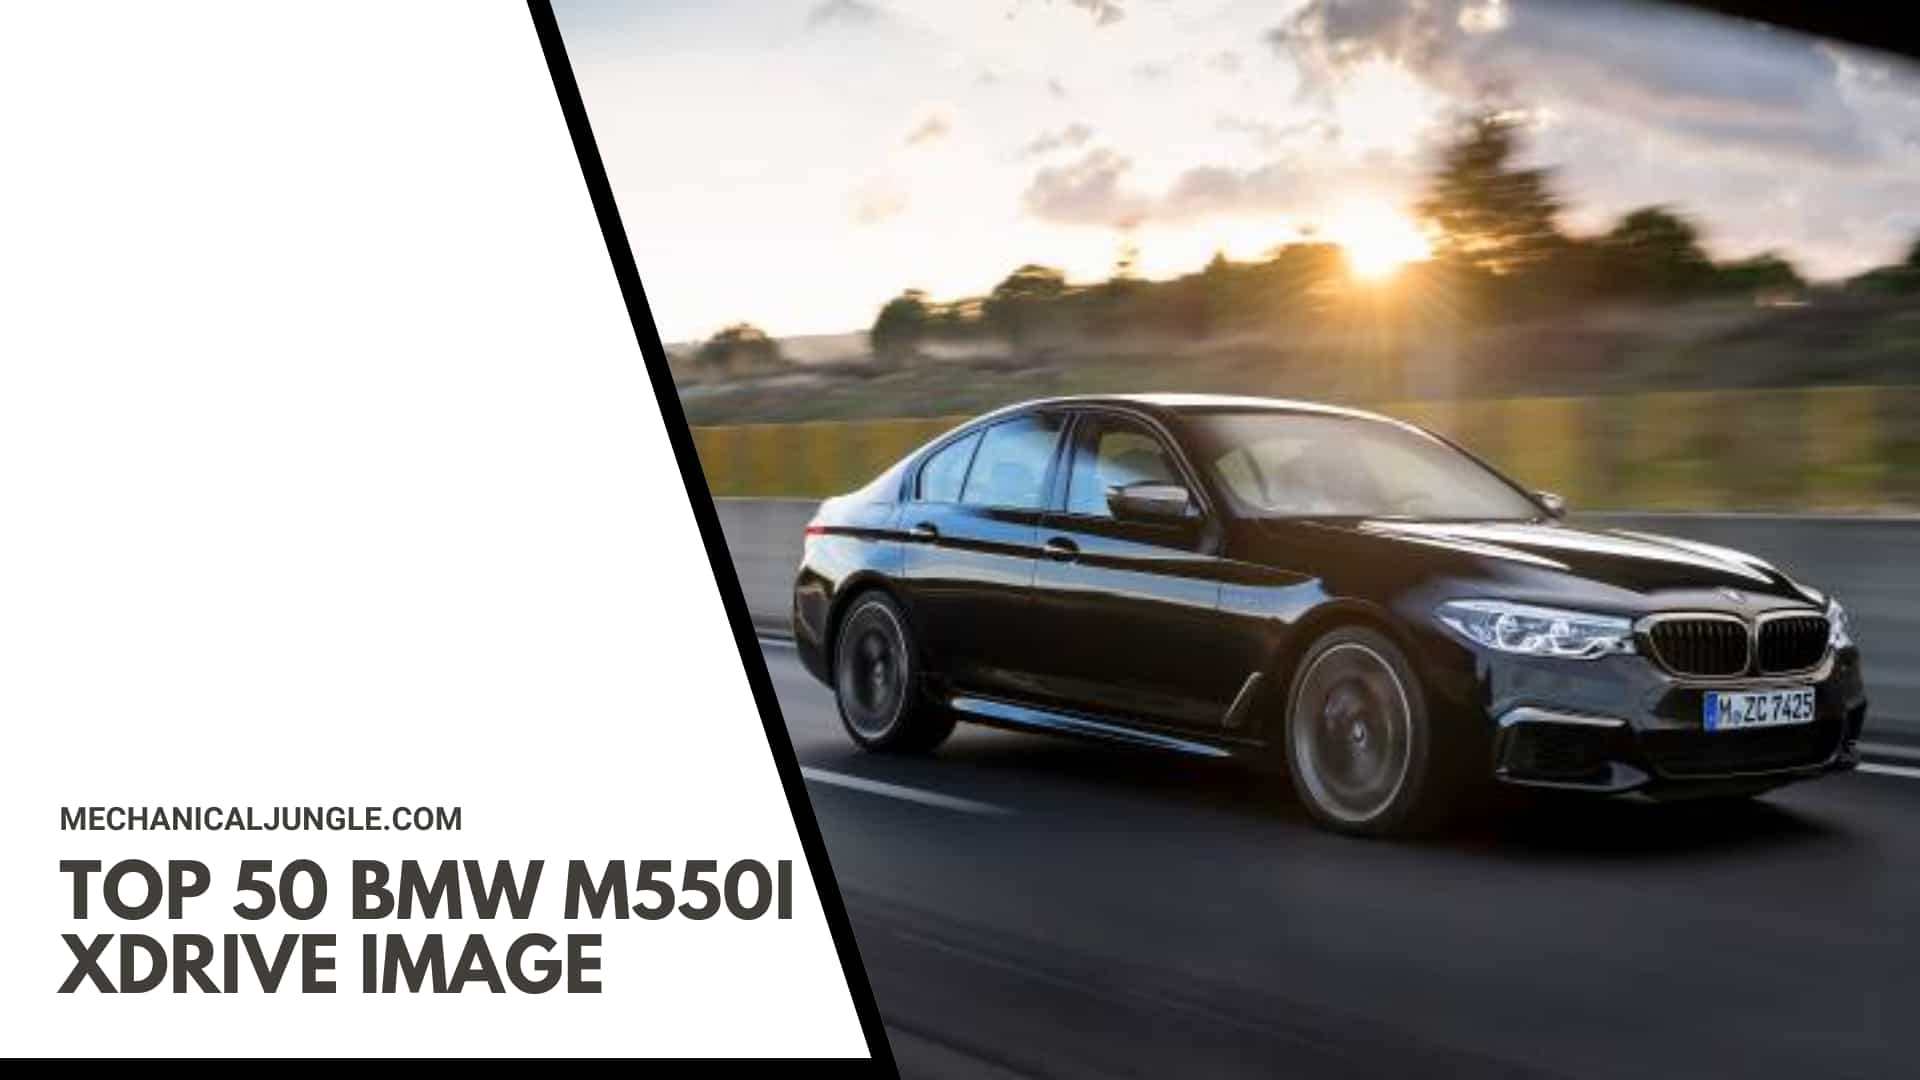 Top 50 BMW M550i xDrive Image